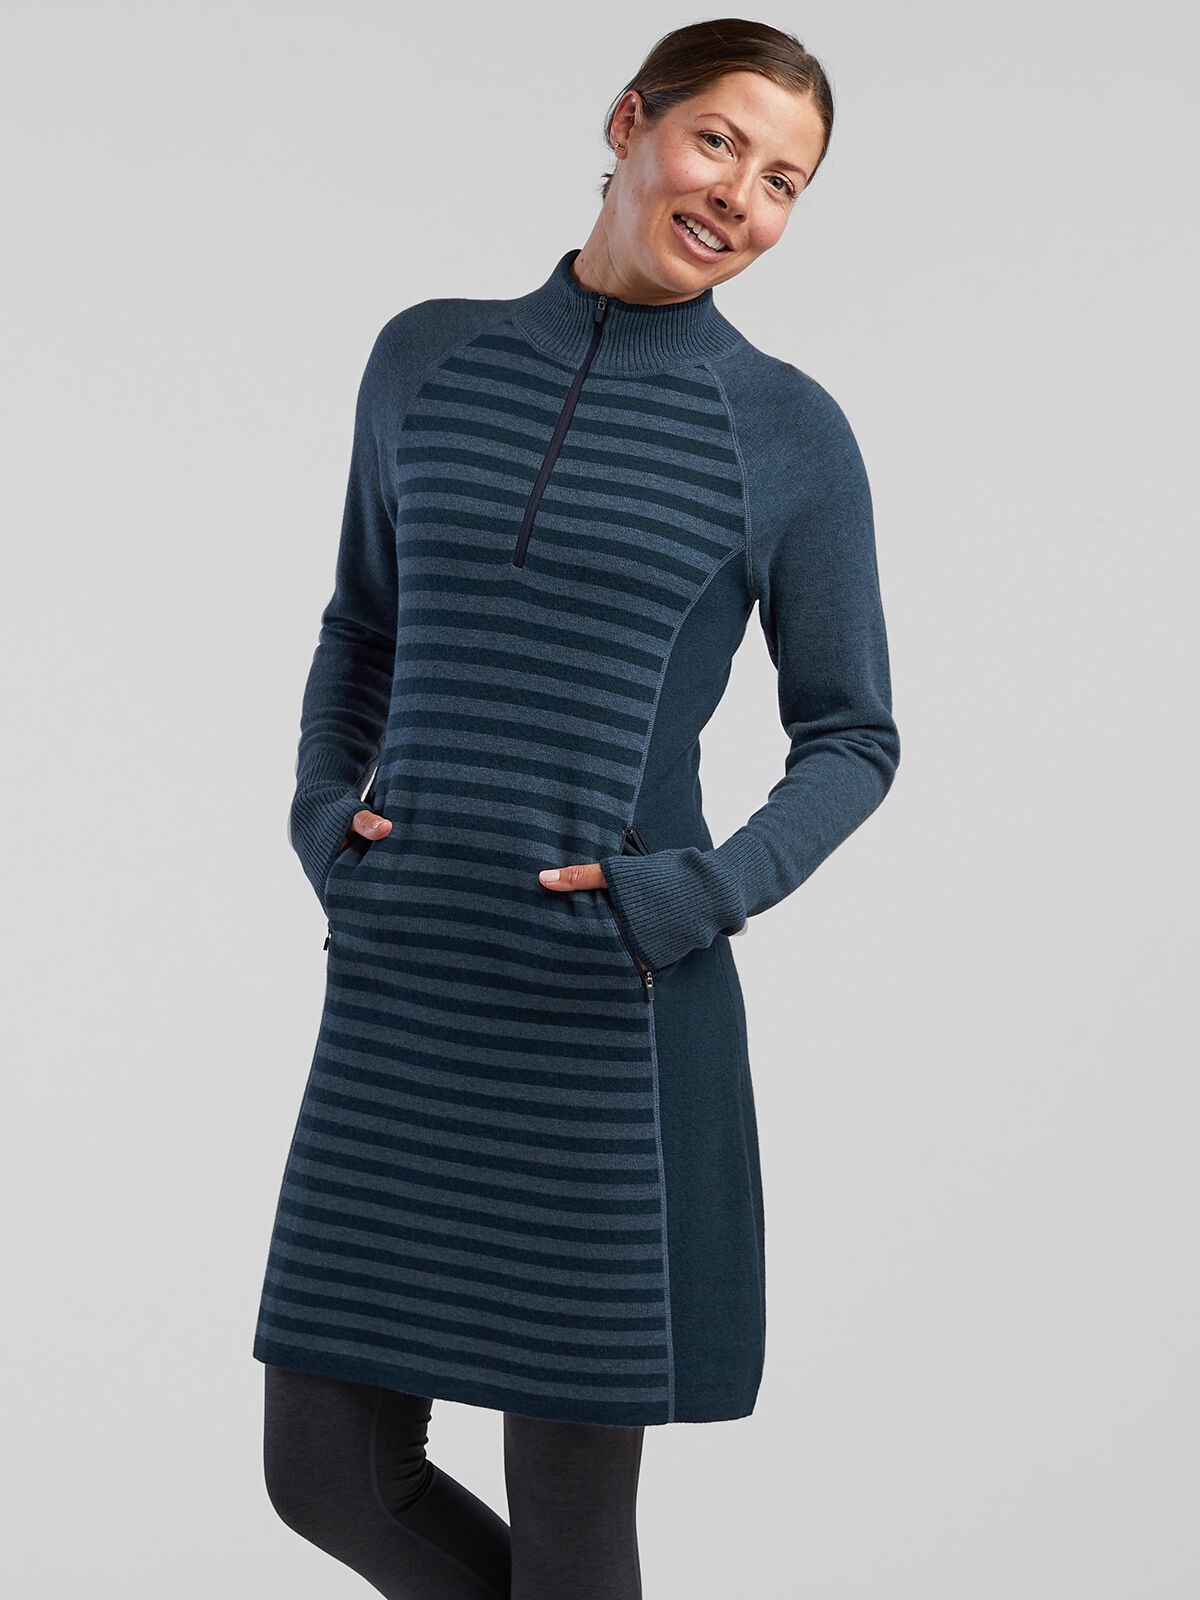 Sweater Dress - Super Power 1/4 Zip Colorblock | Title Nine